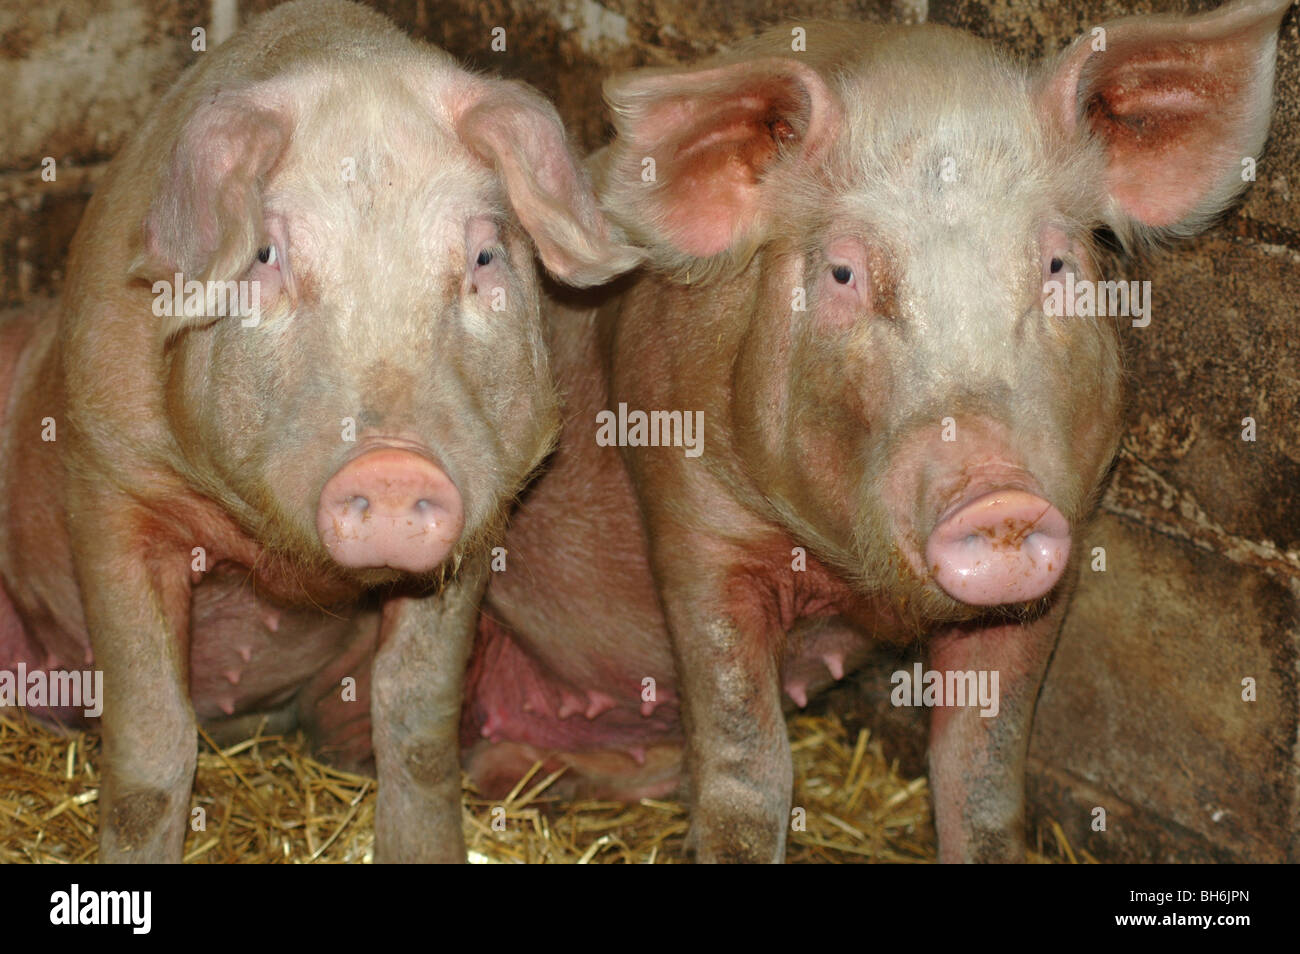 2 pigs looking sad Stock Photo